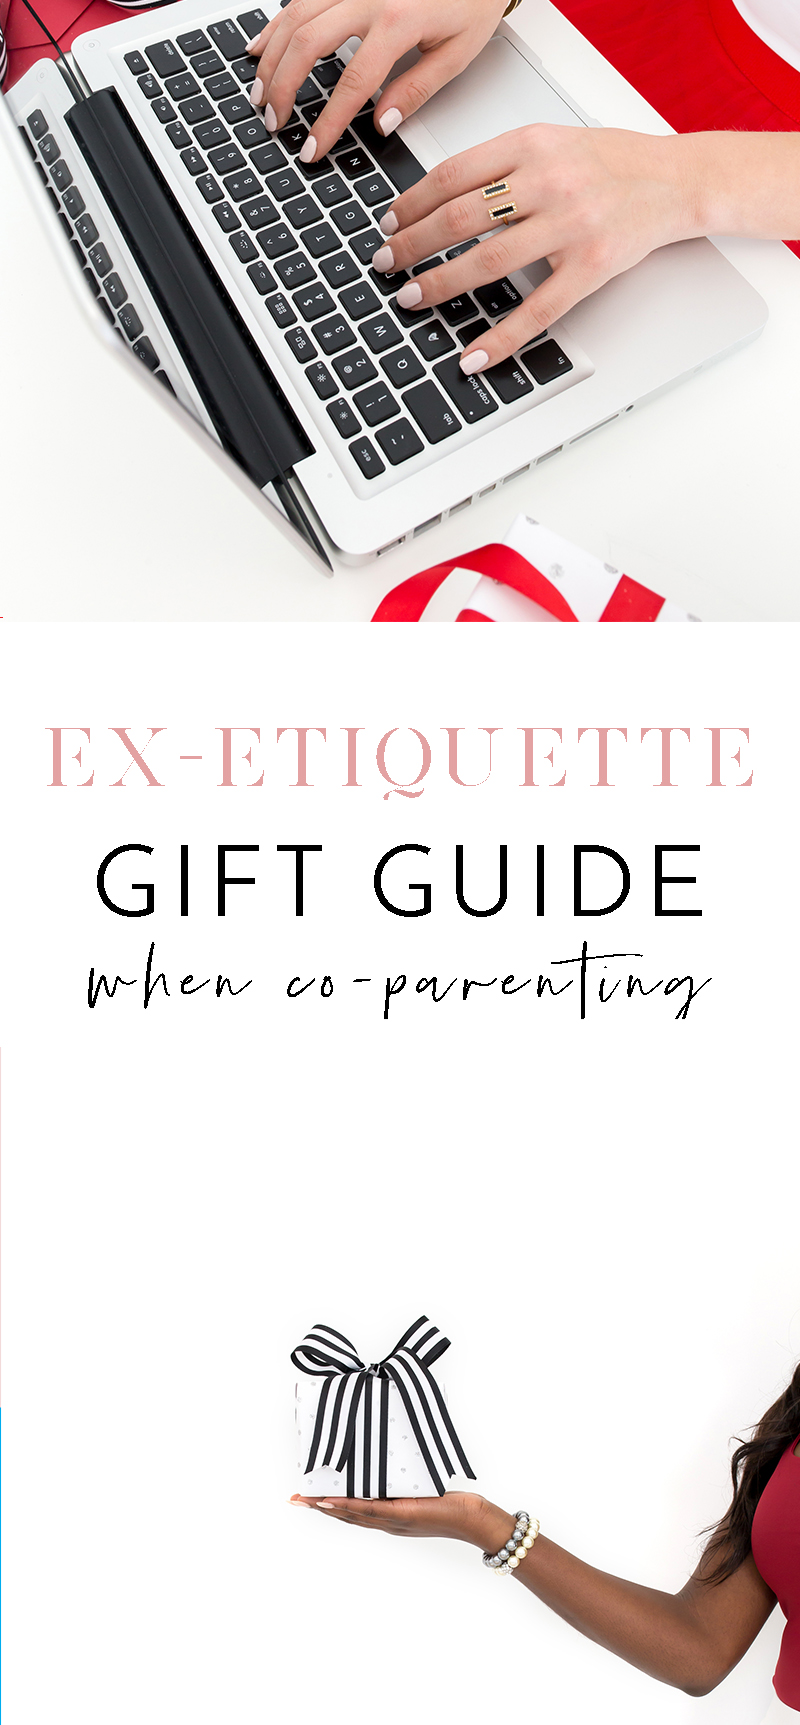 Ex-etiquette Gift Guide When Co-parenting